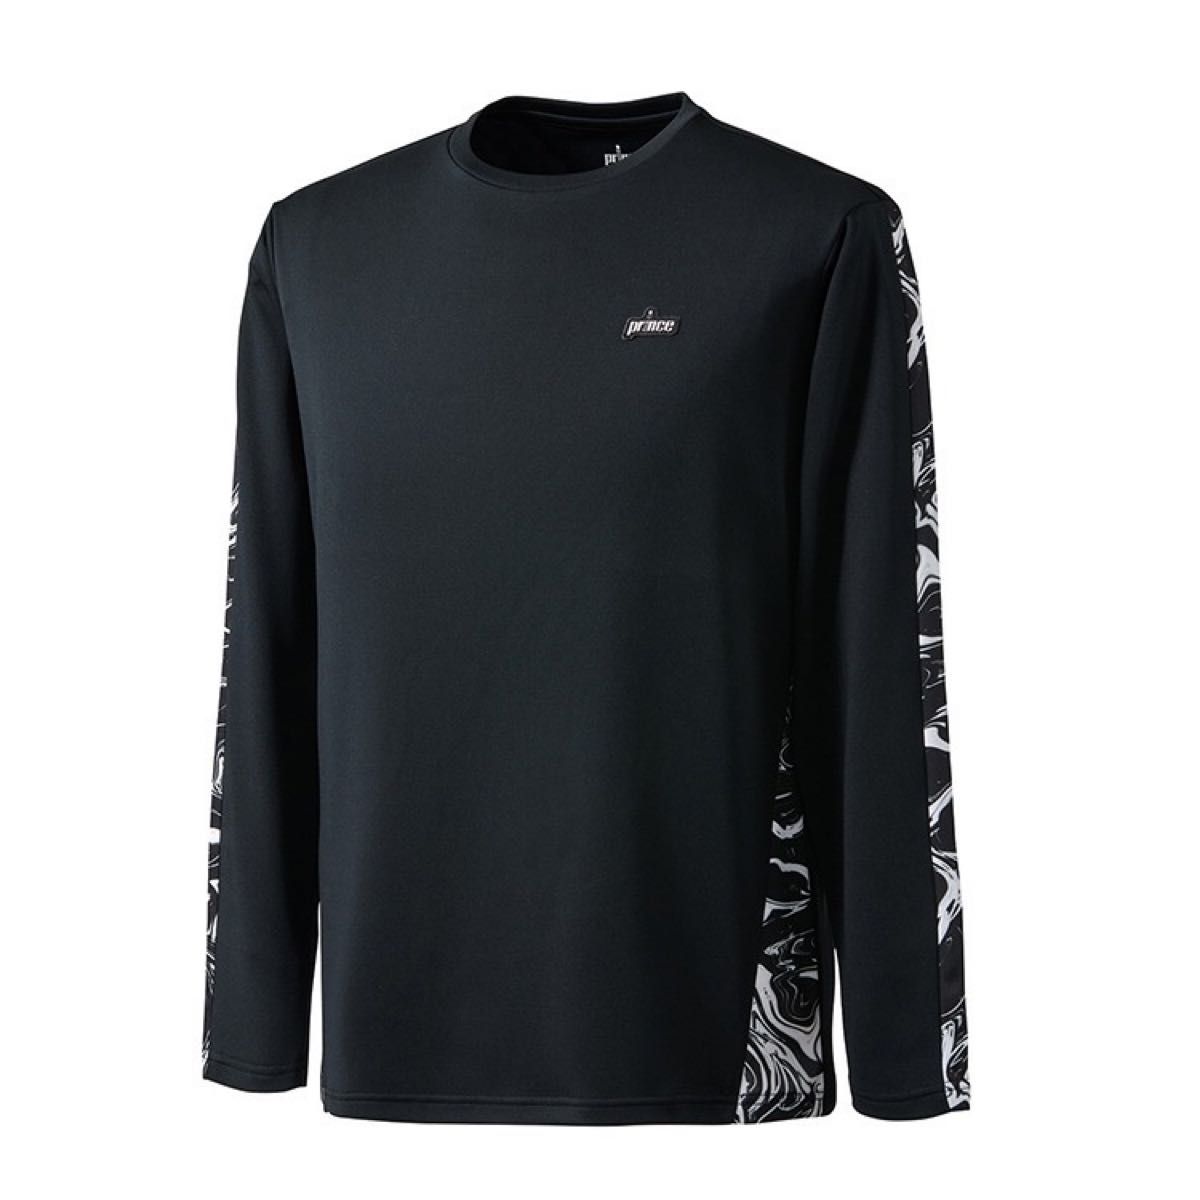 Prince プリンス テニスウェア 長袖Tシャツ MS3008 ブラック(黒) ユニセックスM 新品